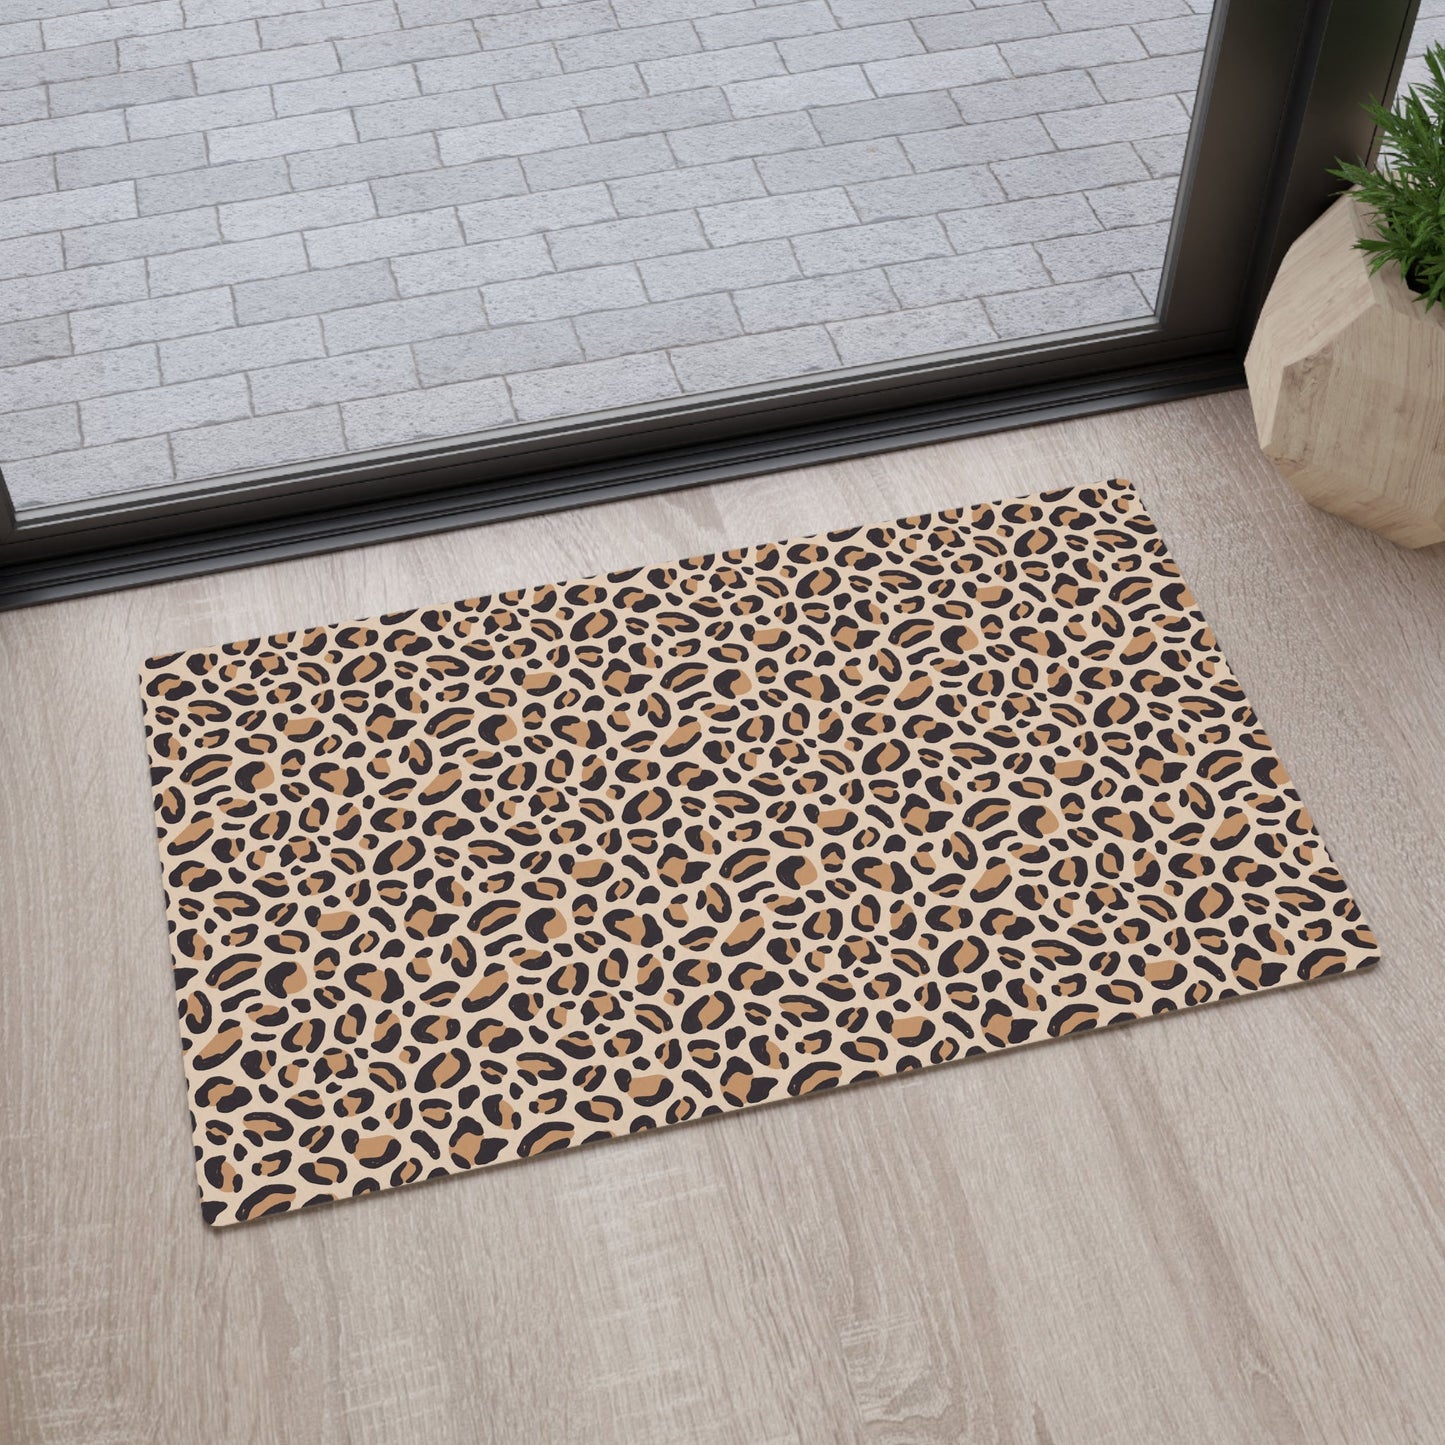 Beautiful Leopard Print Floor Mat - Home Decor - Epileptic Al’s Shop